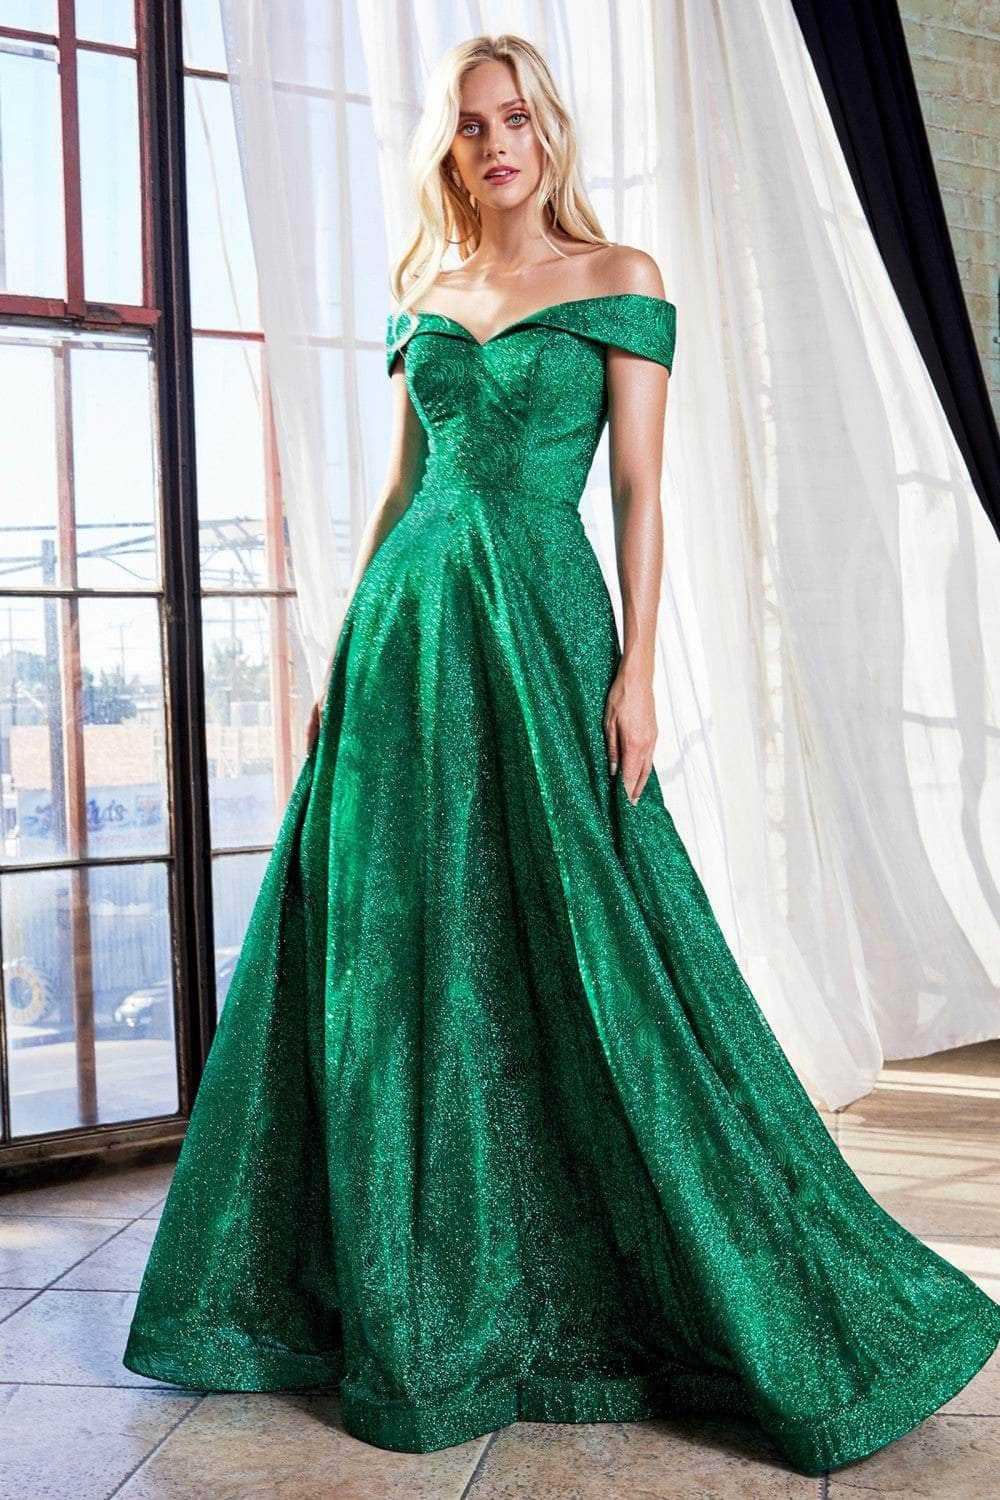 Cinderella Divine, Cinderella Divine - Off-Shoulder Sparkly Glitter Evening Gown CB050SC - 1 pc Emerald In Size 6 Available